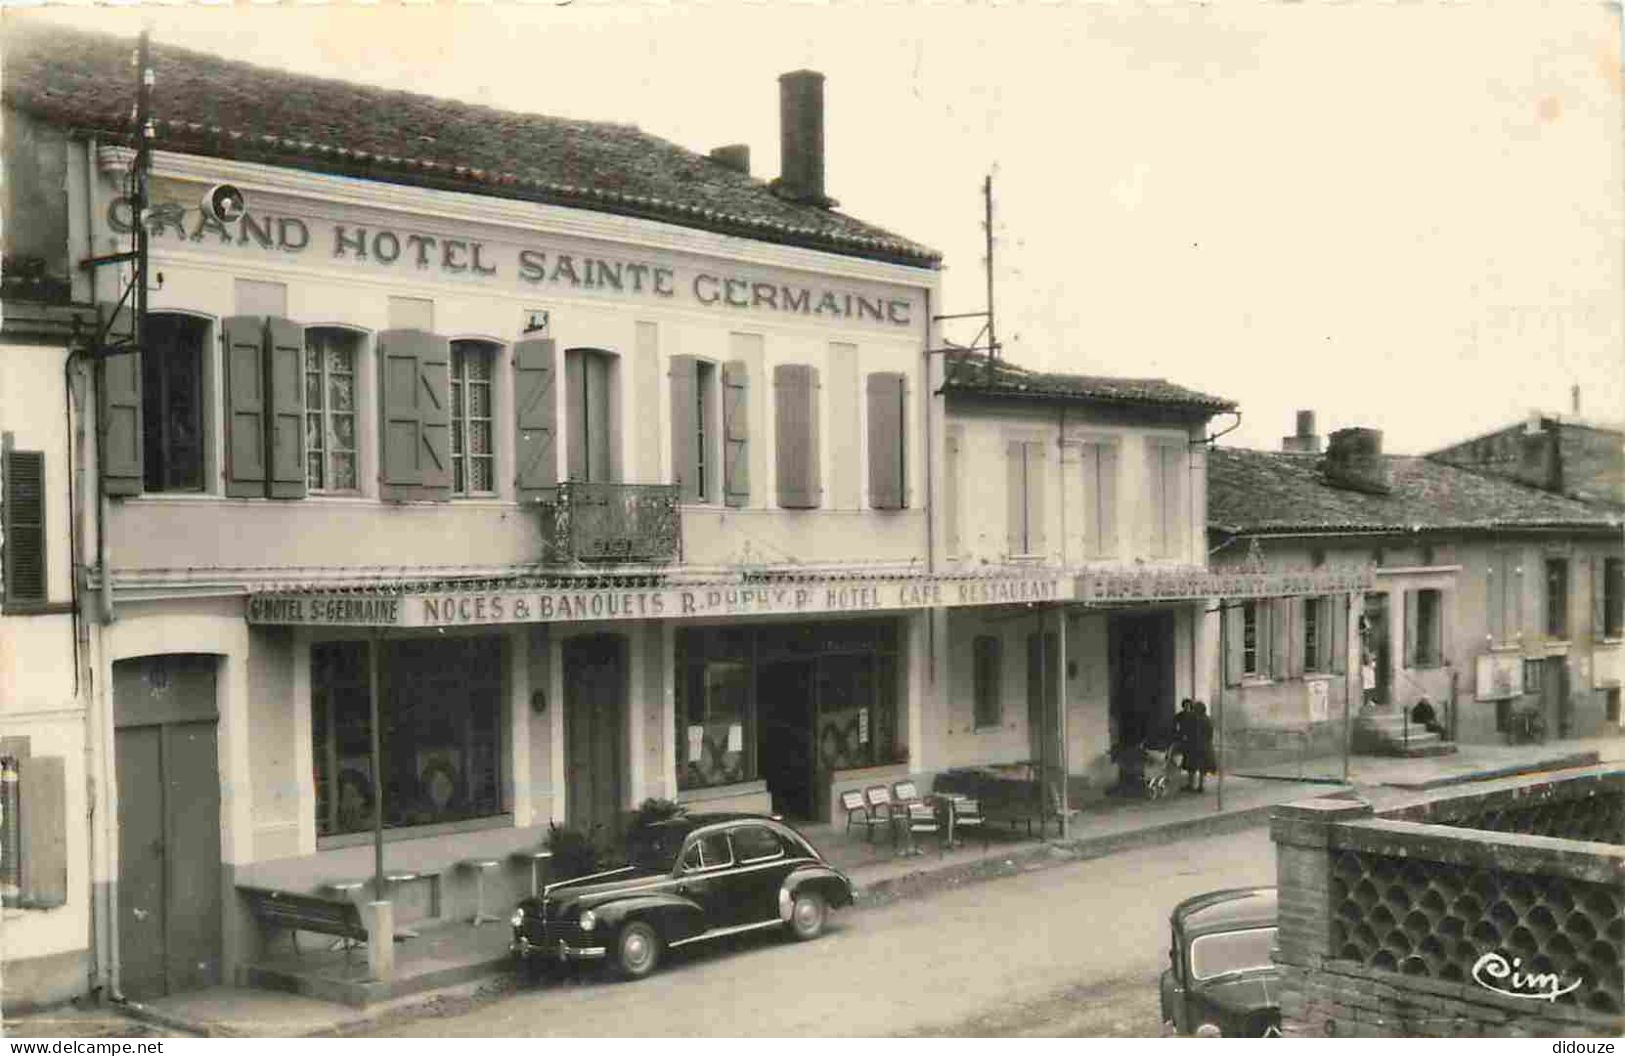 31 - Pibrac - Rue Principale - Grand Hotel Sainte Germaine - Animée - Automobiles - Mention Photographie Véritable - Car - Pibrac